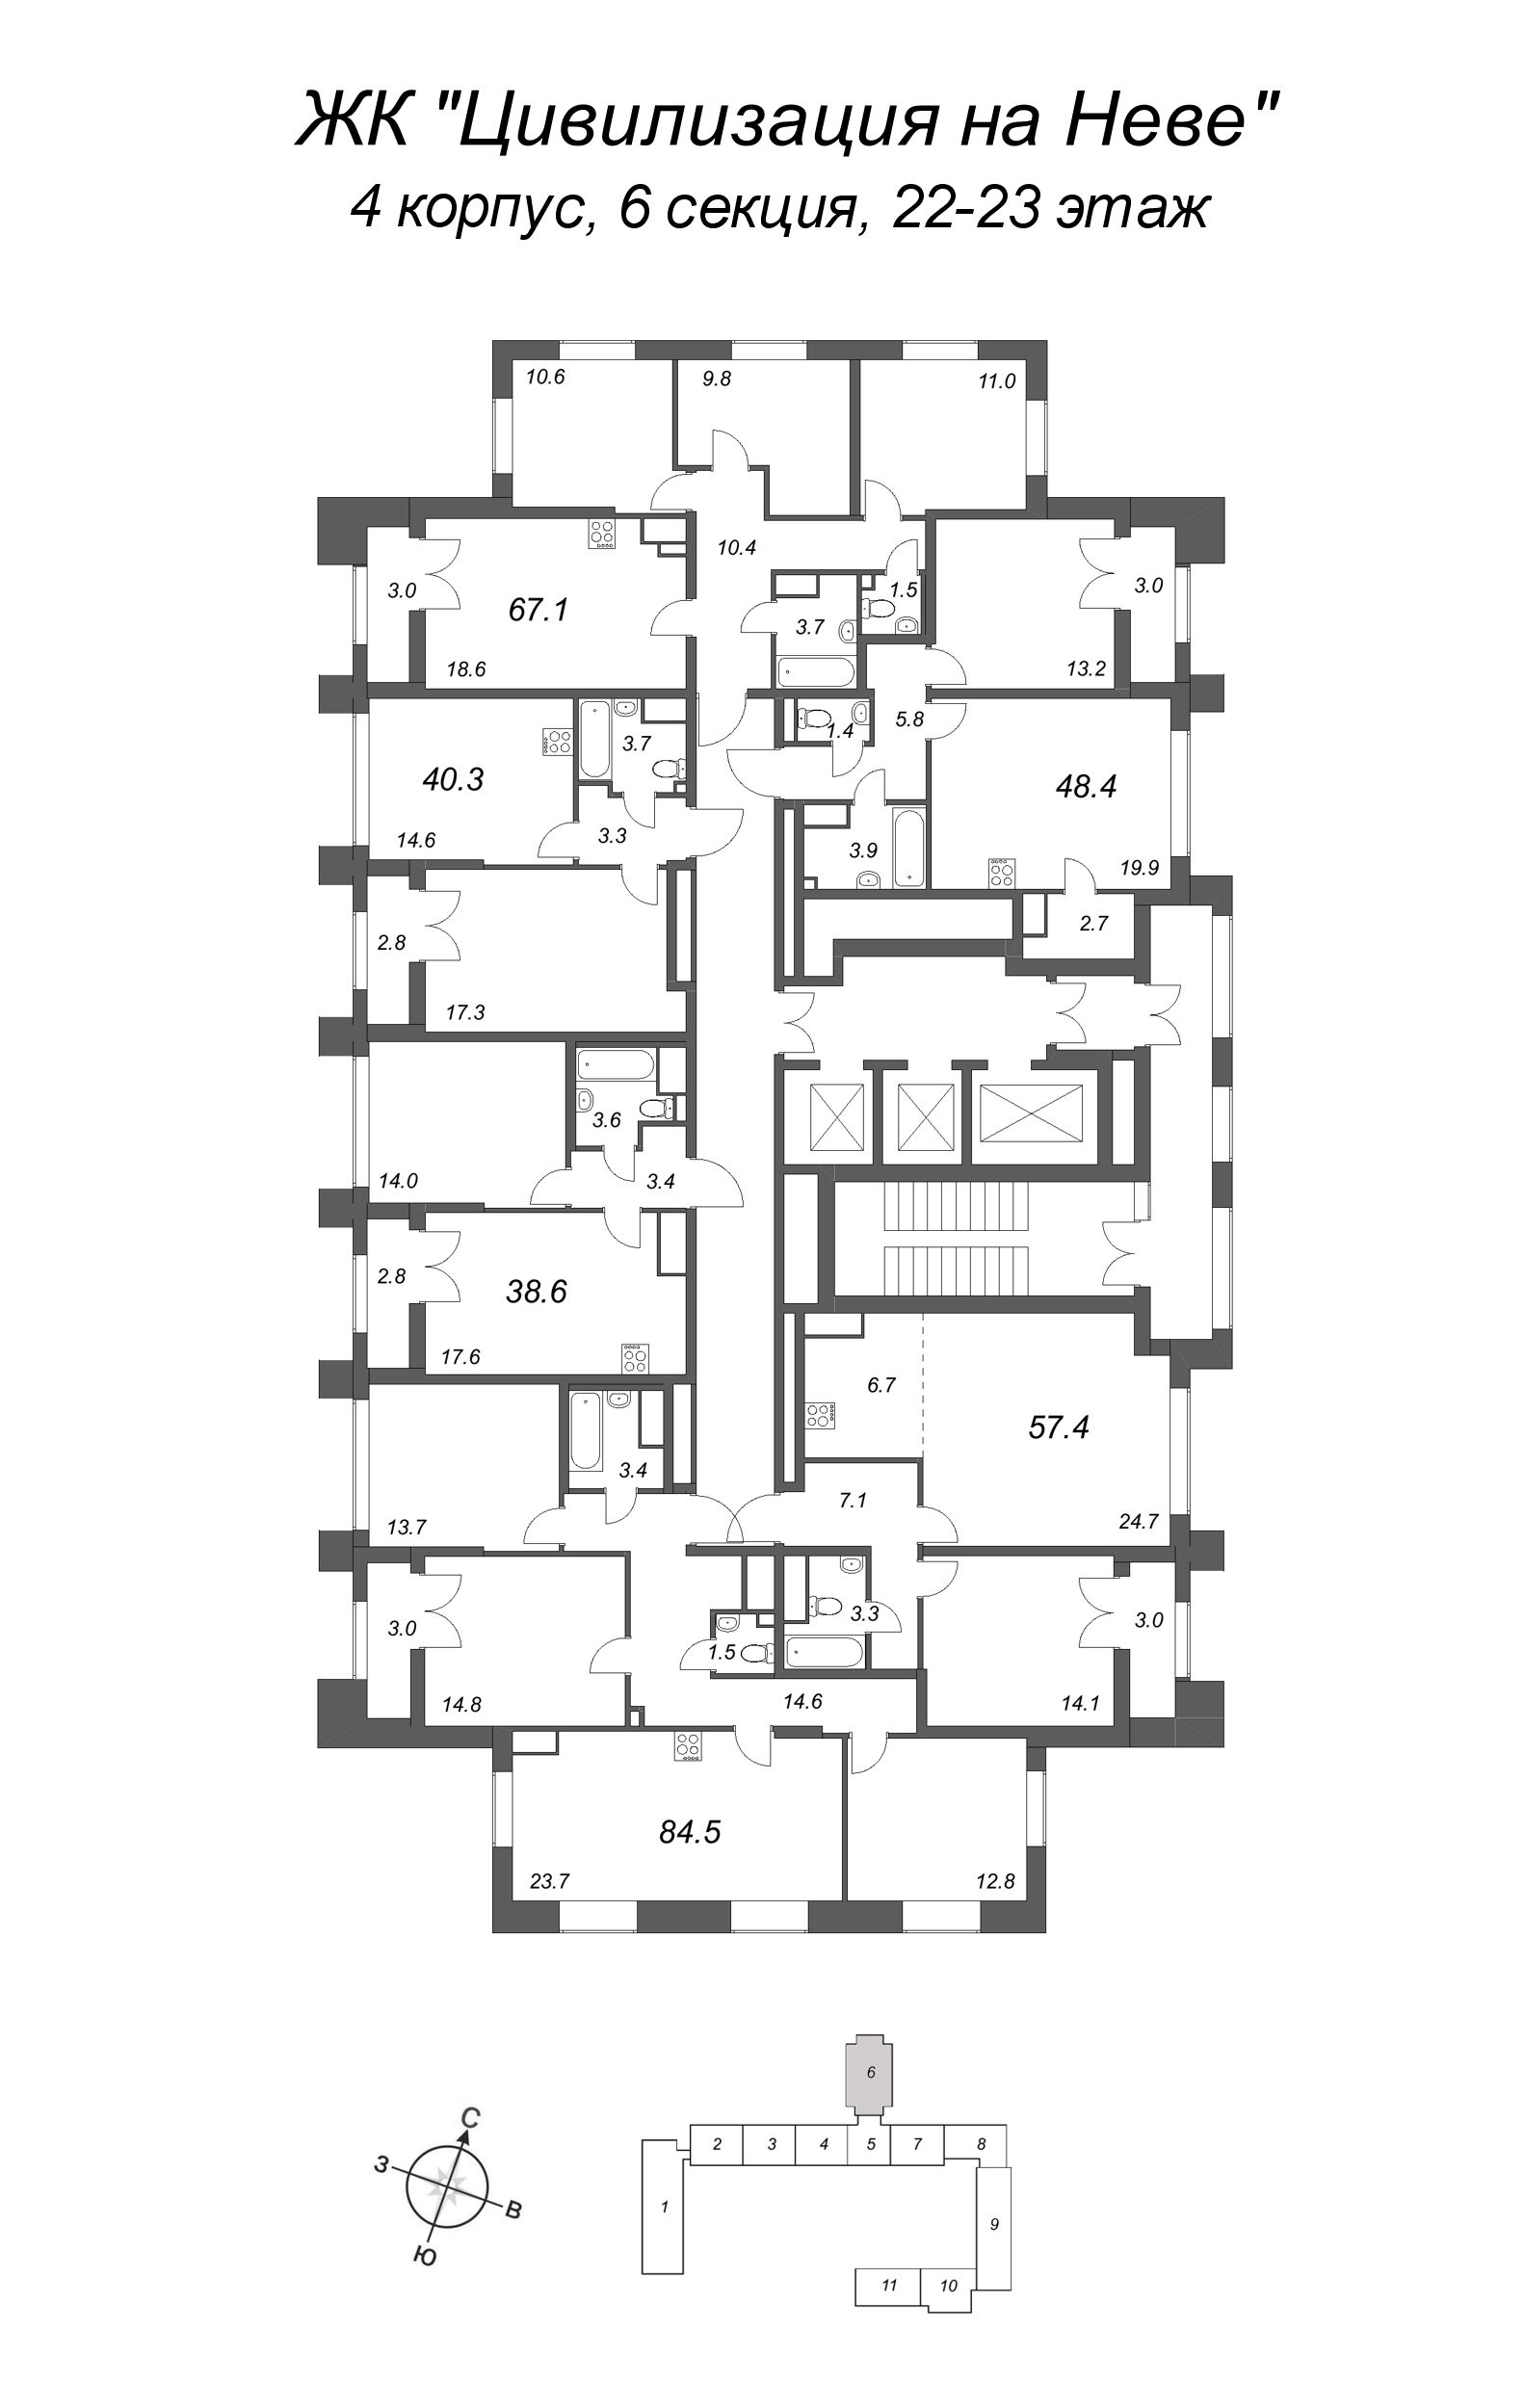 2-комнатная (Евро) квартира, 57.4 м² - планировка этажа